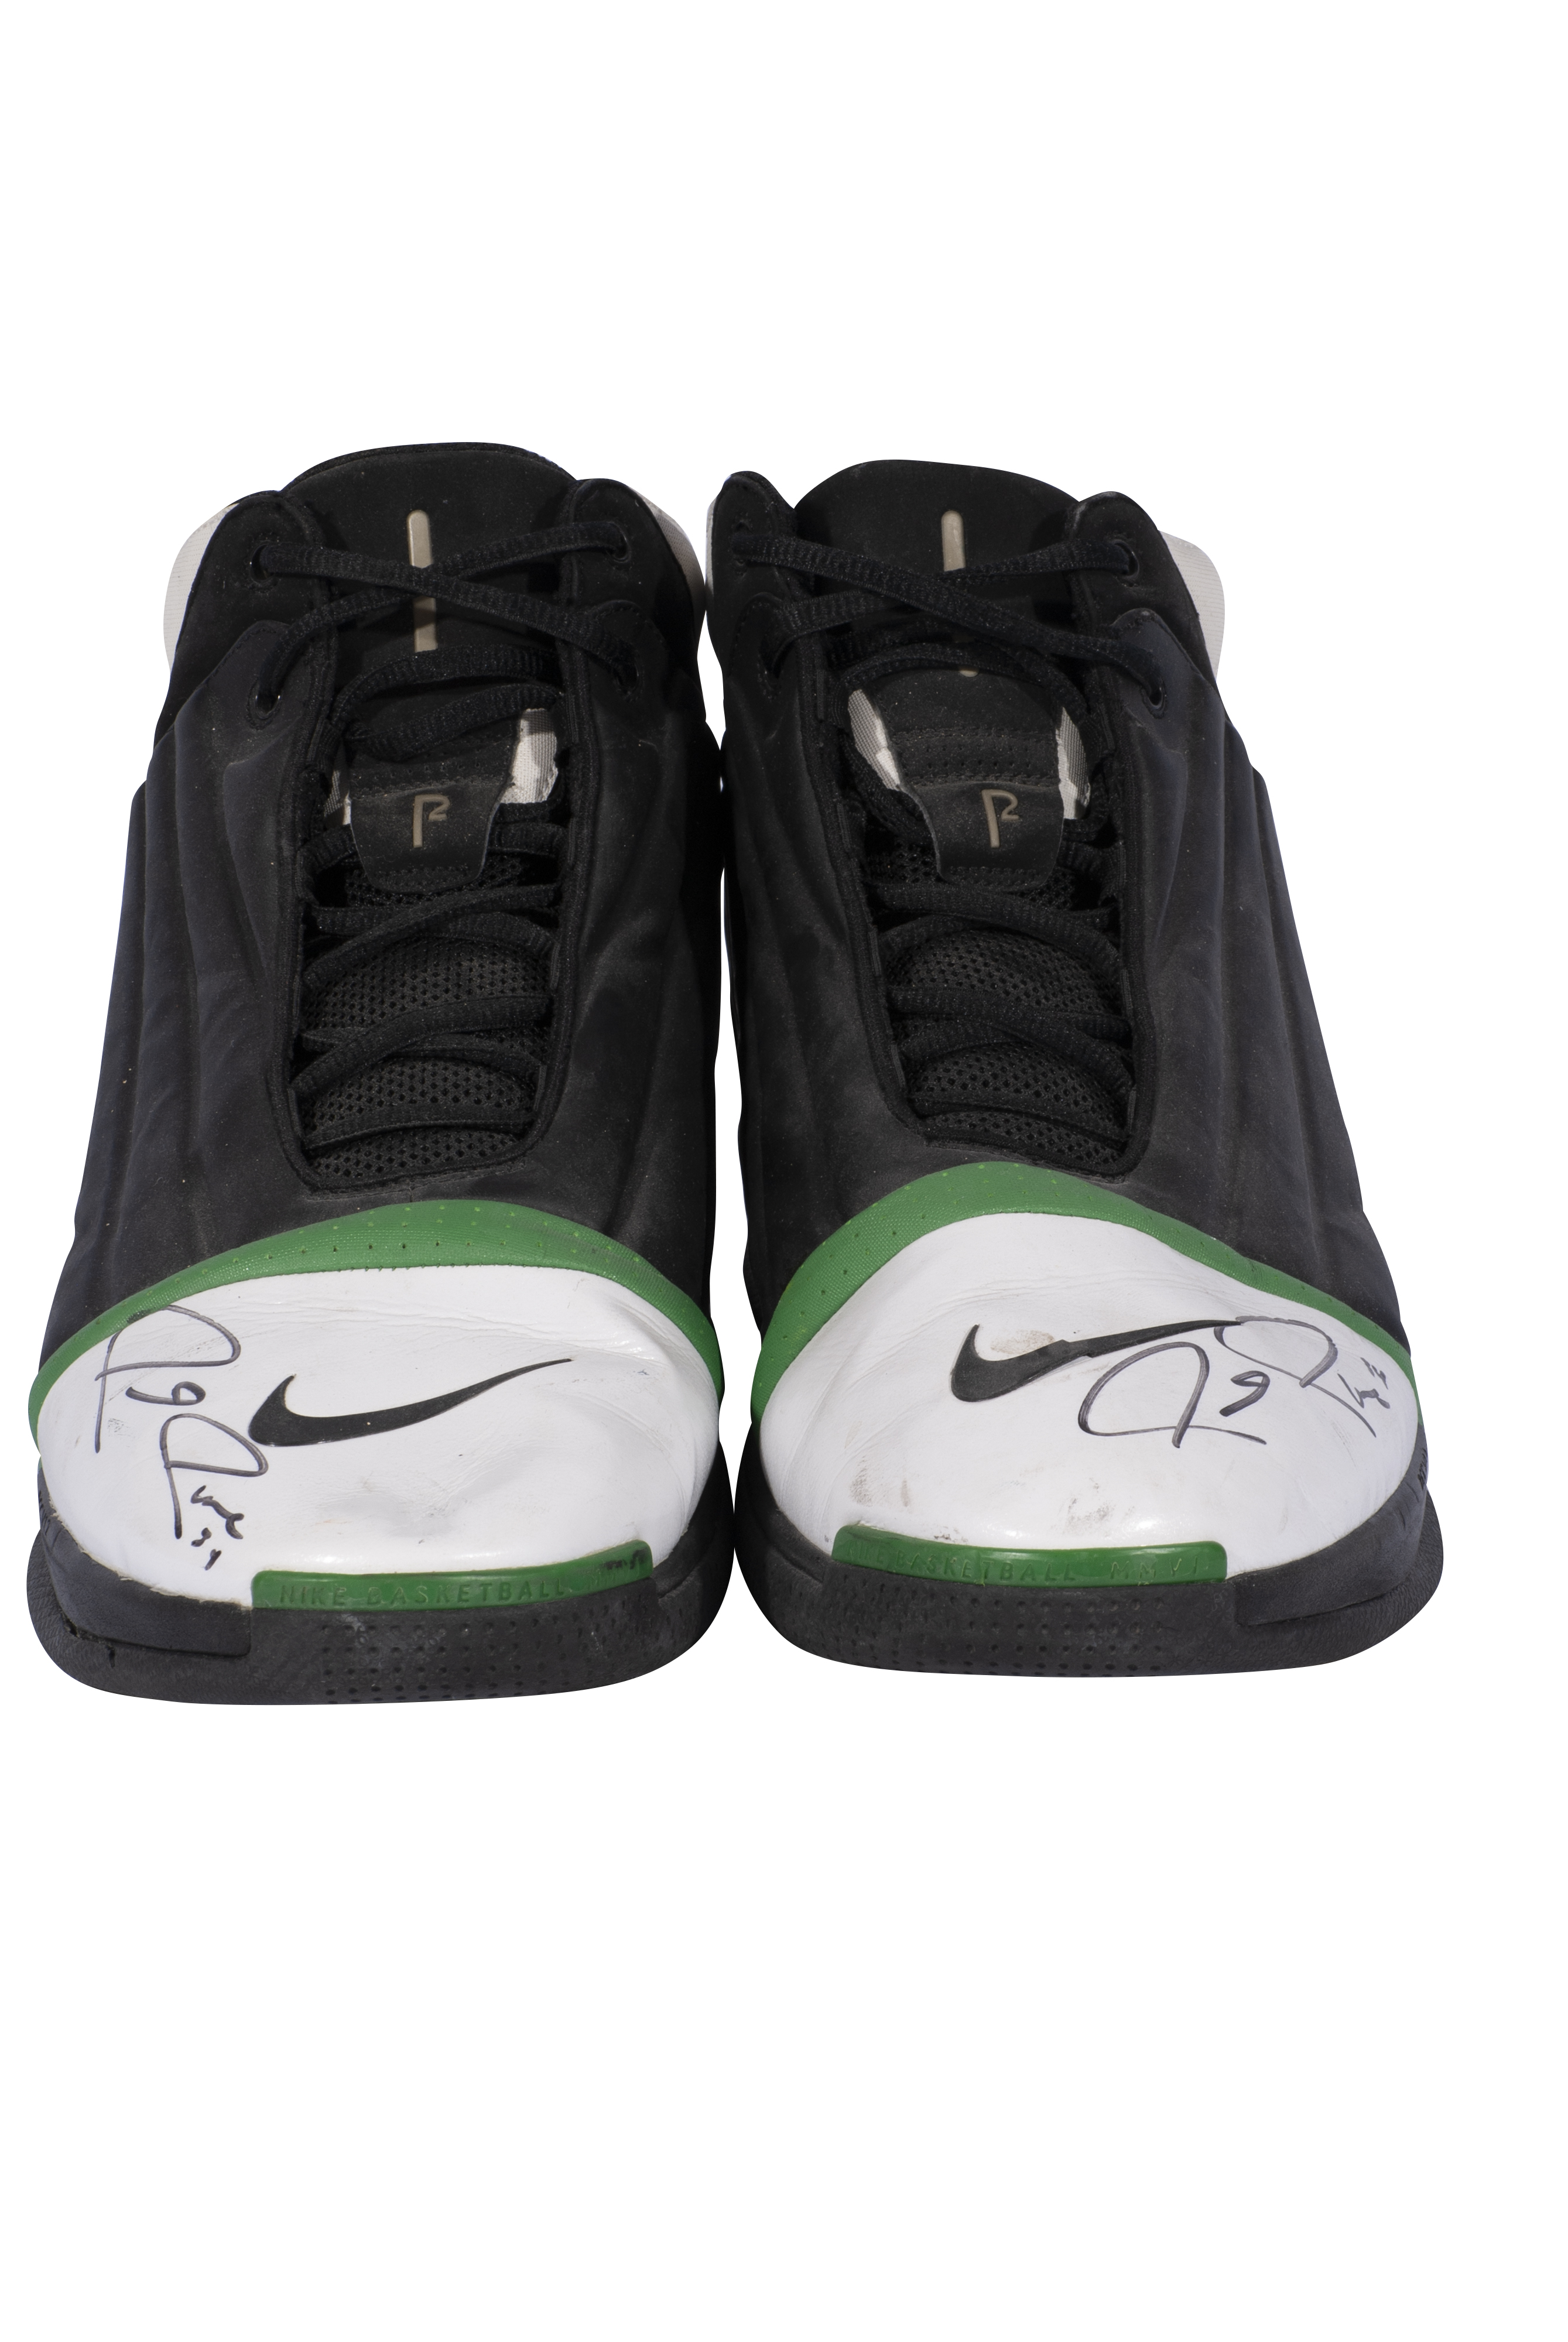 Paul Pierce Signed Nike Basketball Shoe (JSA)